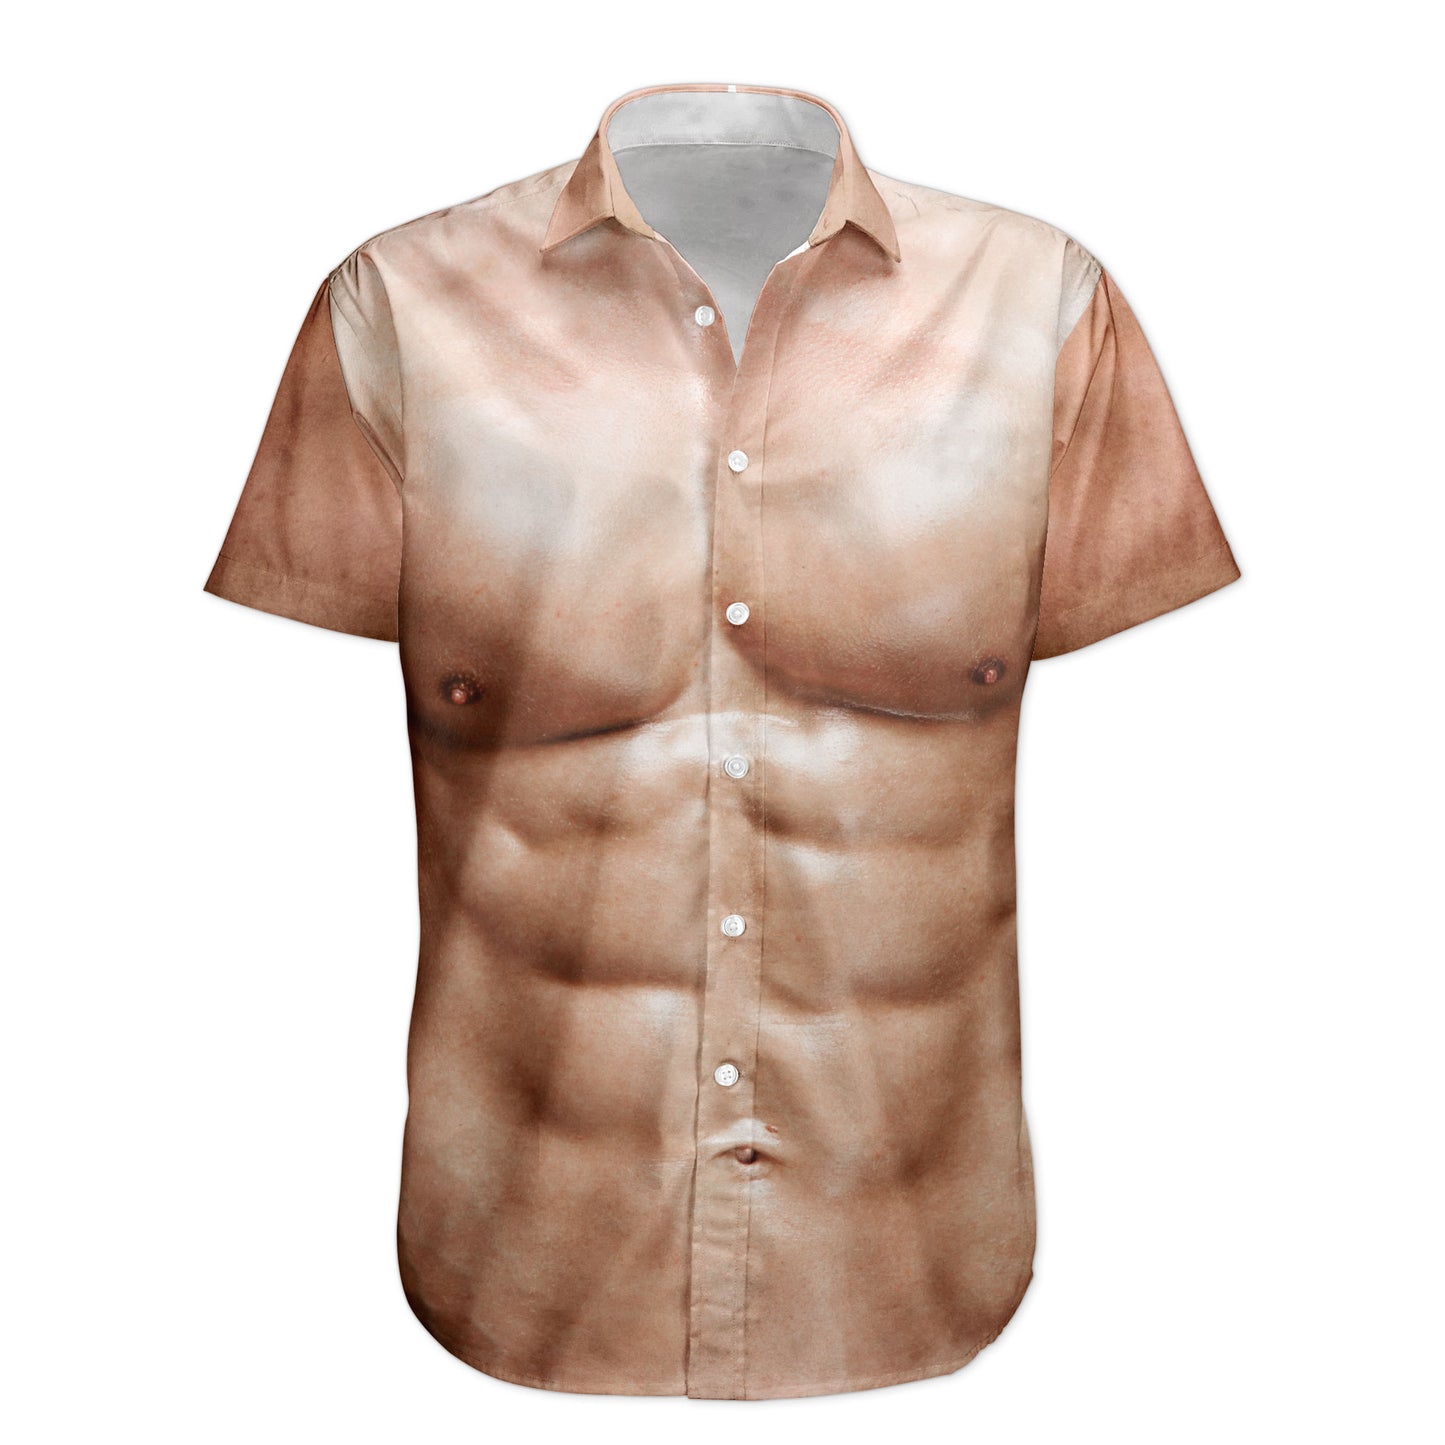 Men's Muscle Six-Pack Abs Ugly Hawaiian Shirt - Personalized Hawaiian Shirt